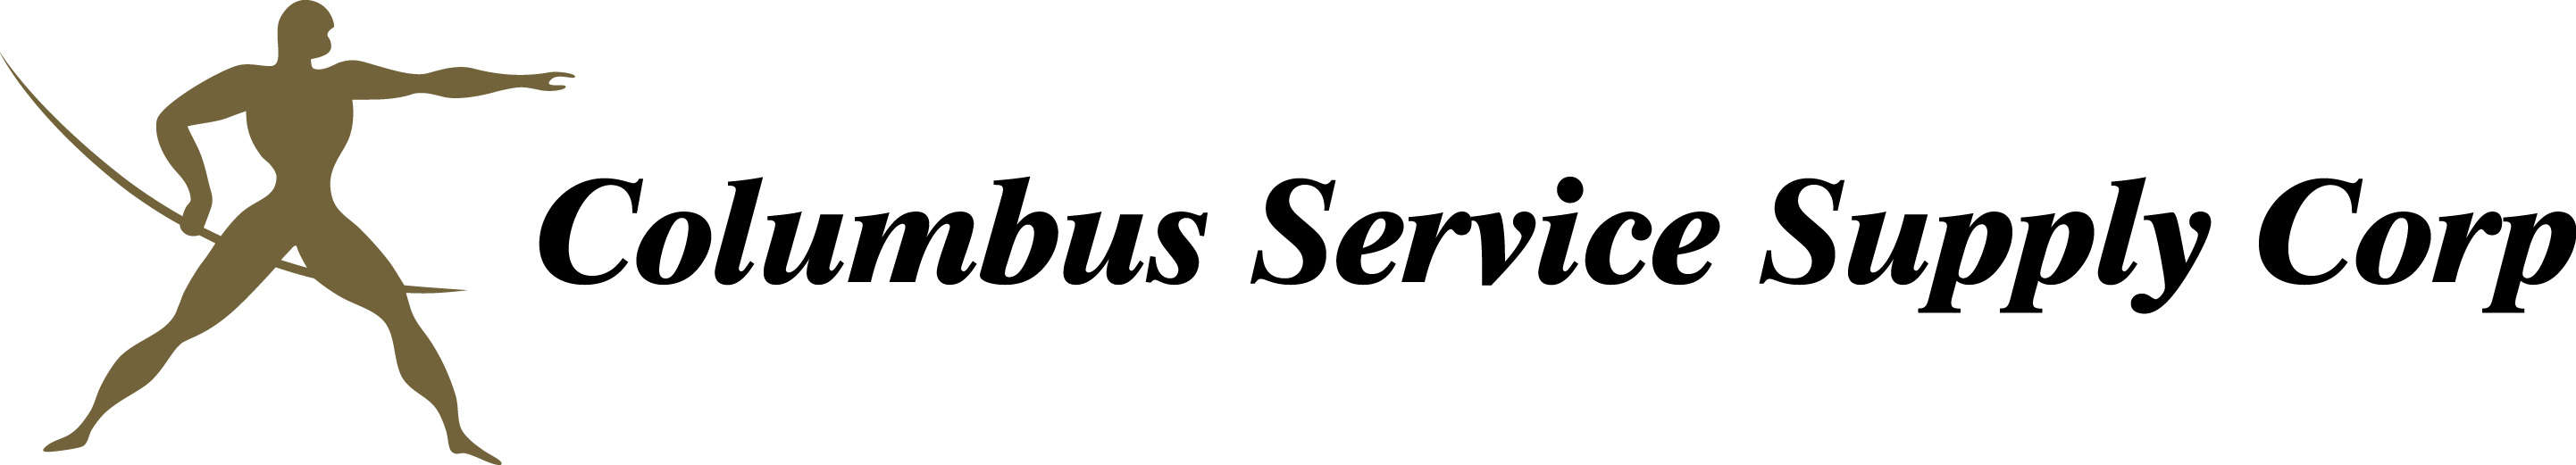 Columbus Service Supply Corp Logo